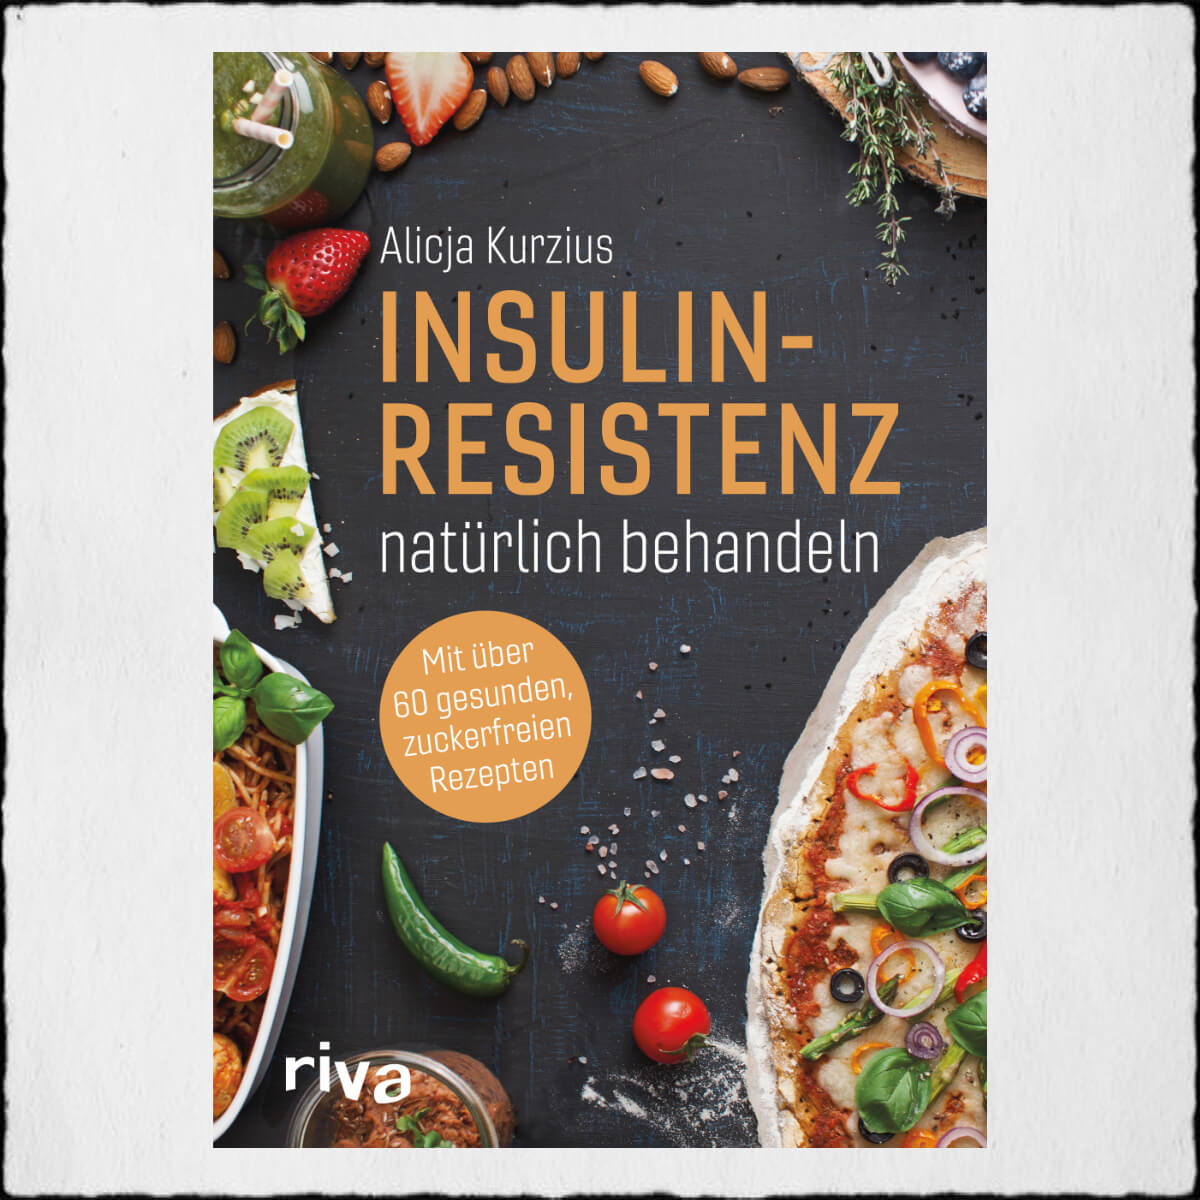 Alicja Kurzius, "Insulinresistenz - natürlich behandeln" (© 2019 by riva Verlag)